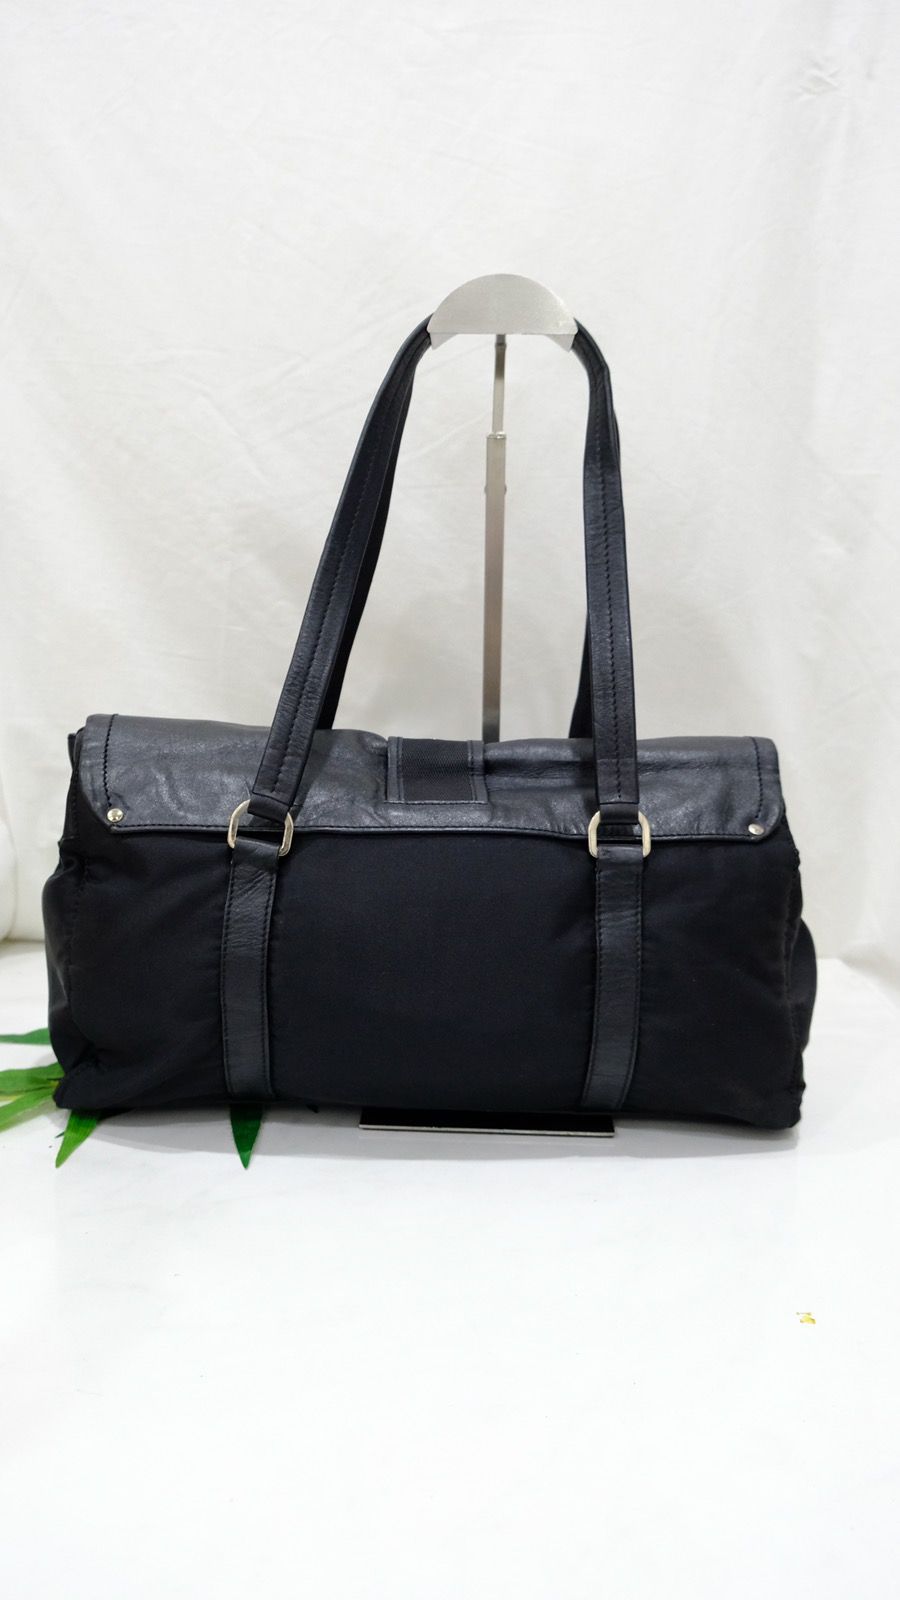 Authentic Black Prada handbag leather and nylon - 3